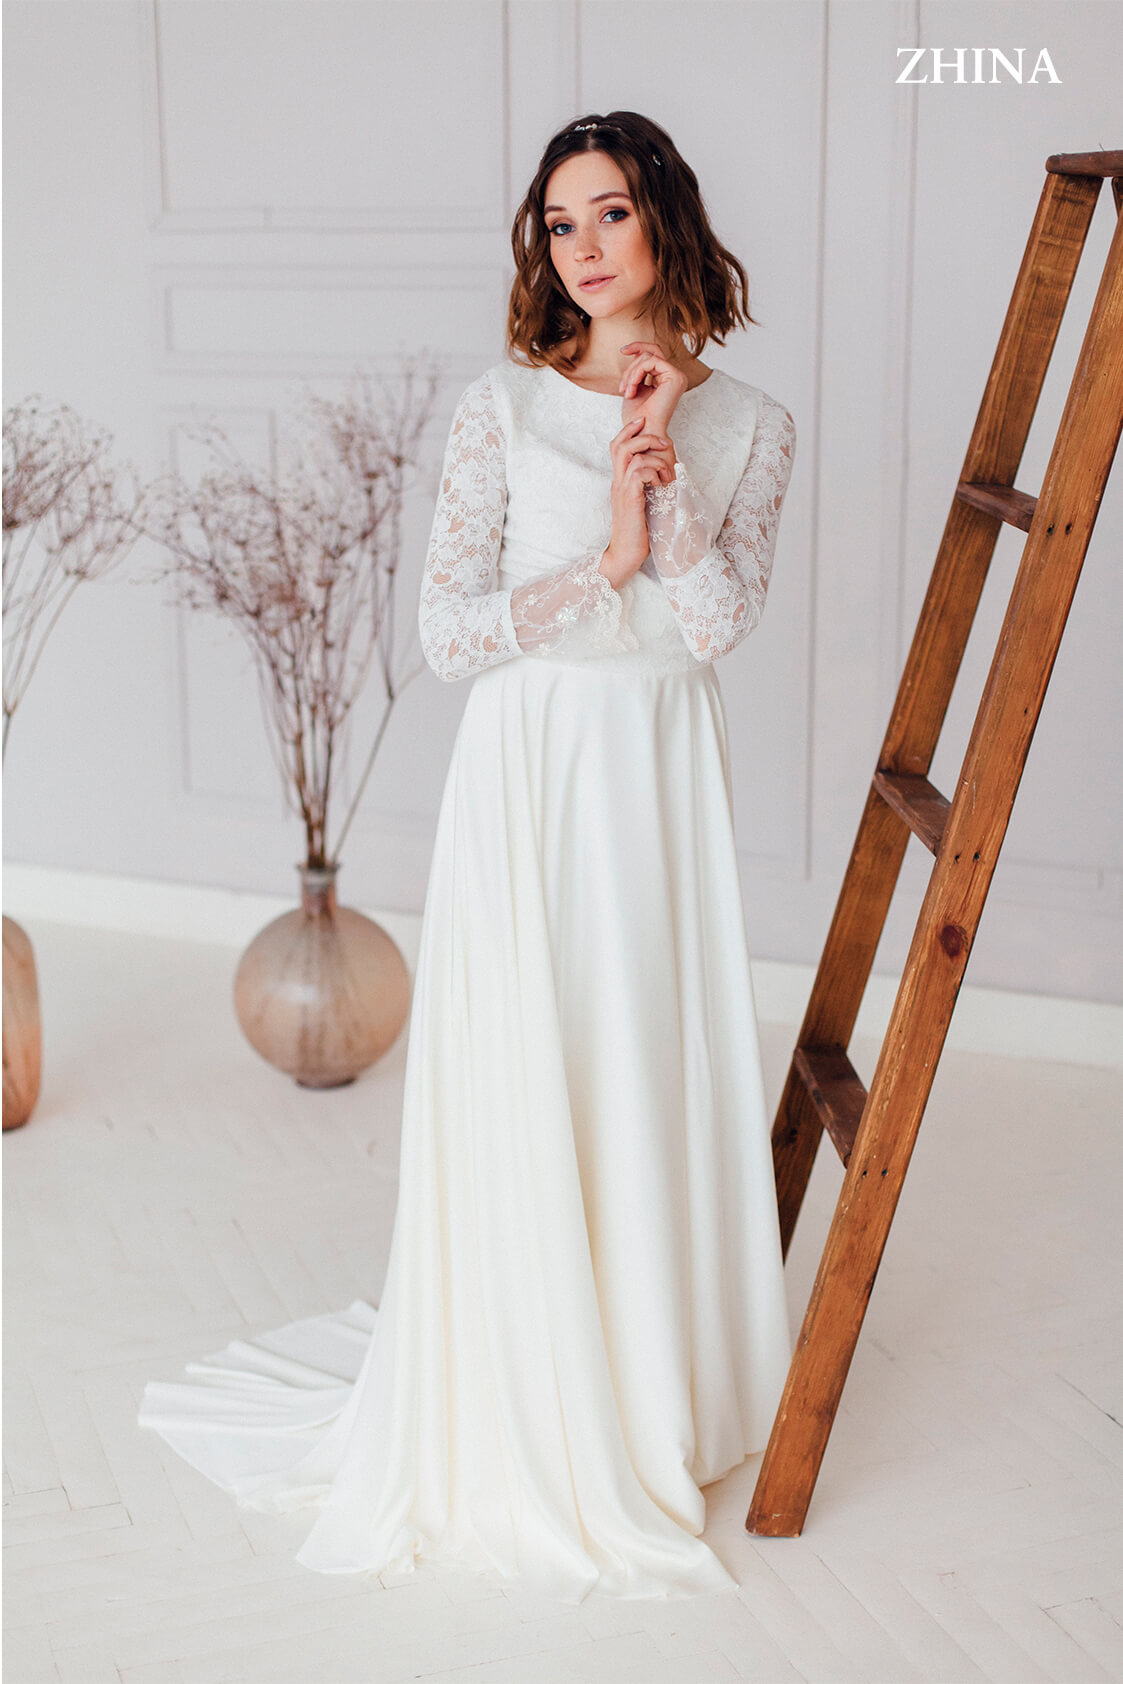 ZHINA - wedding dress "Refined Elegance" collection